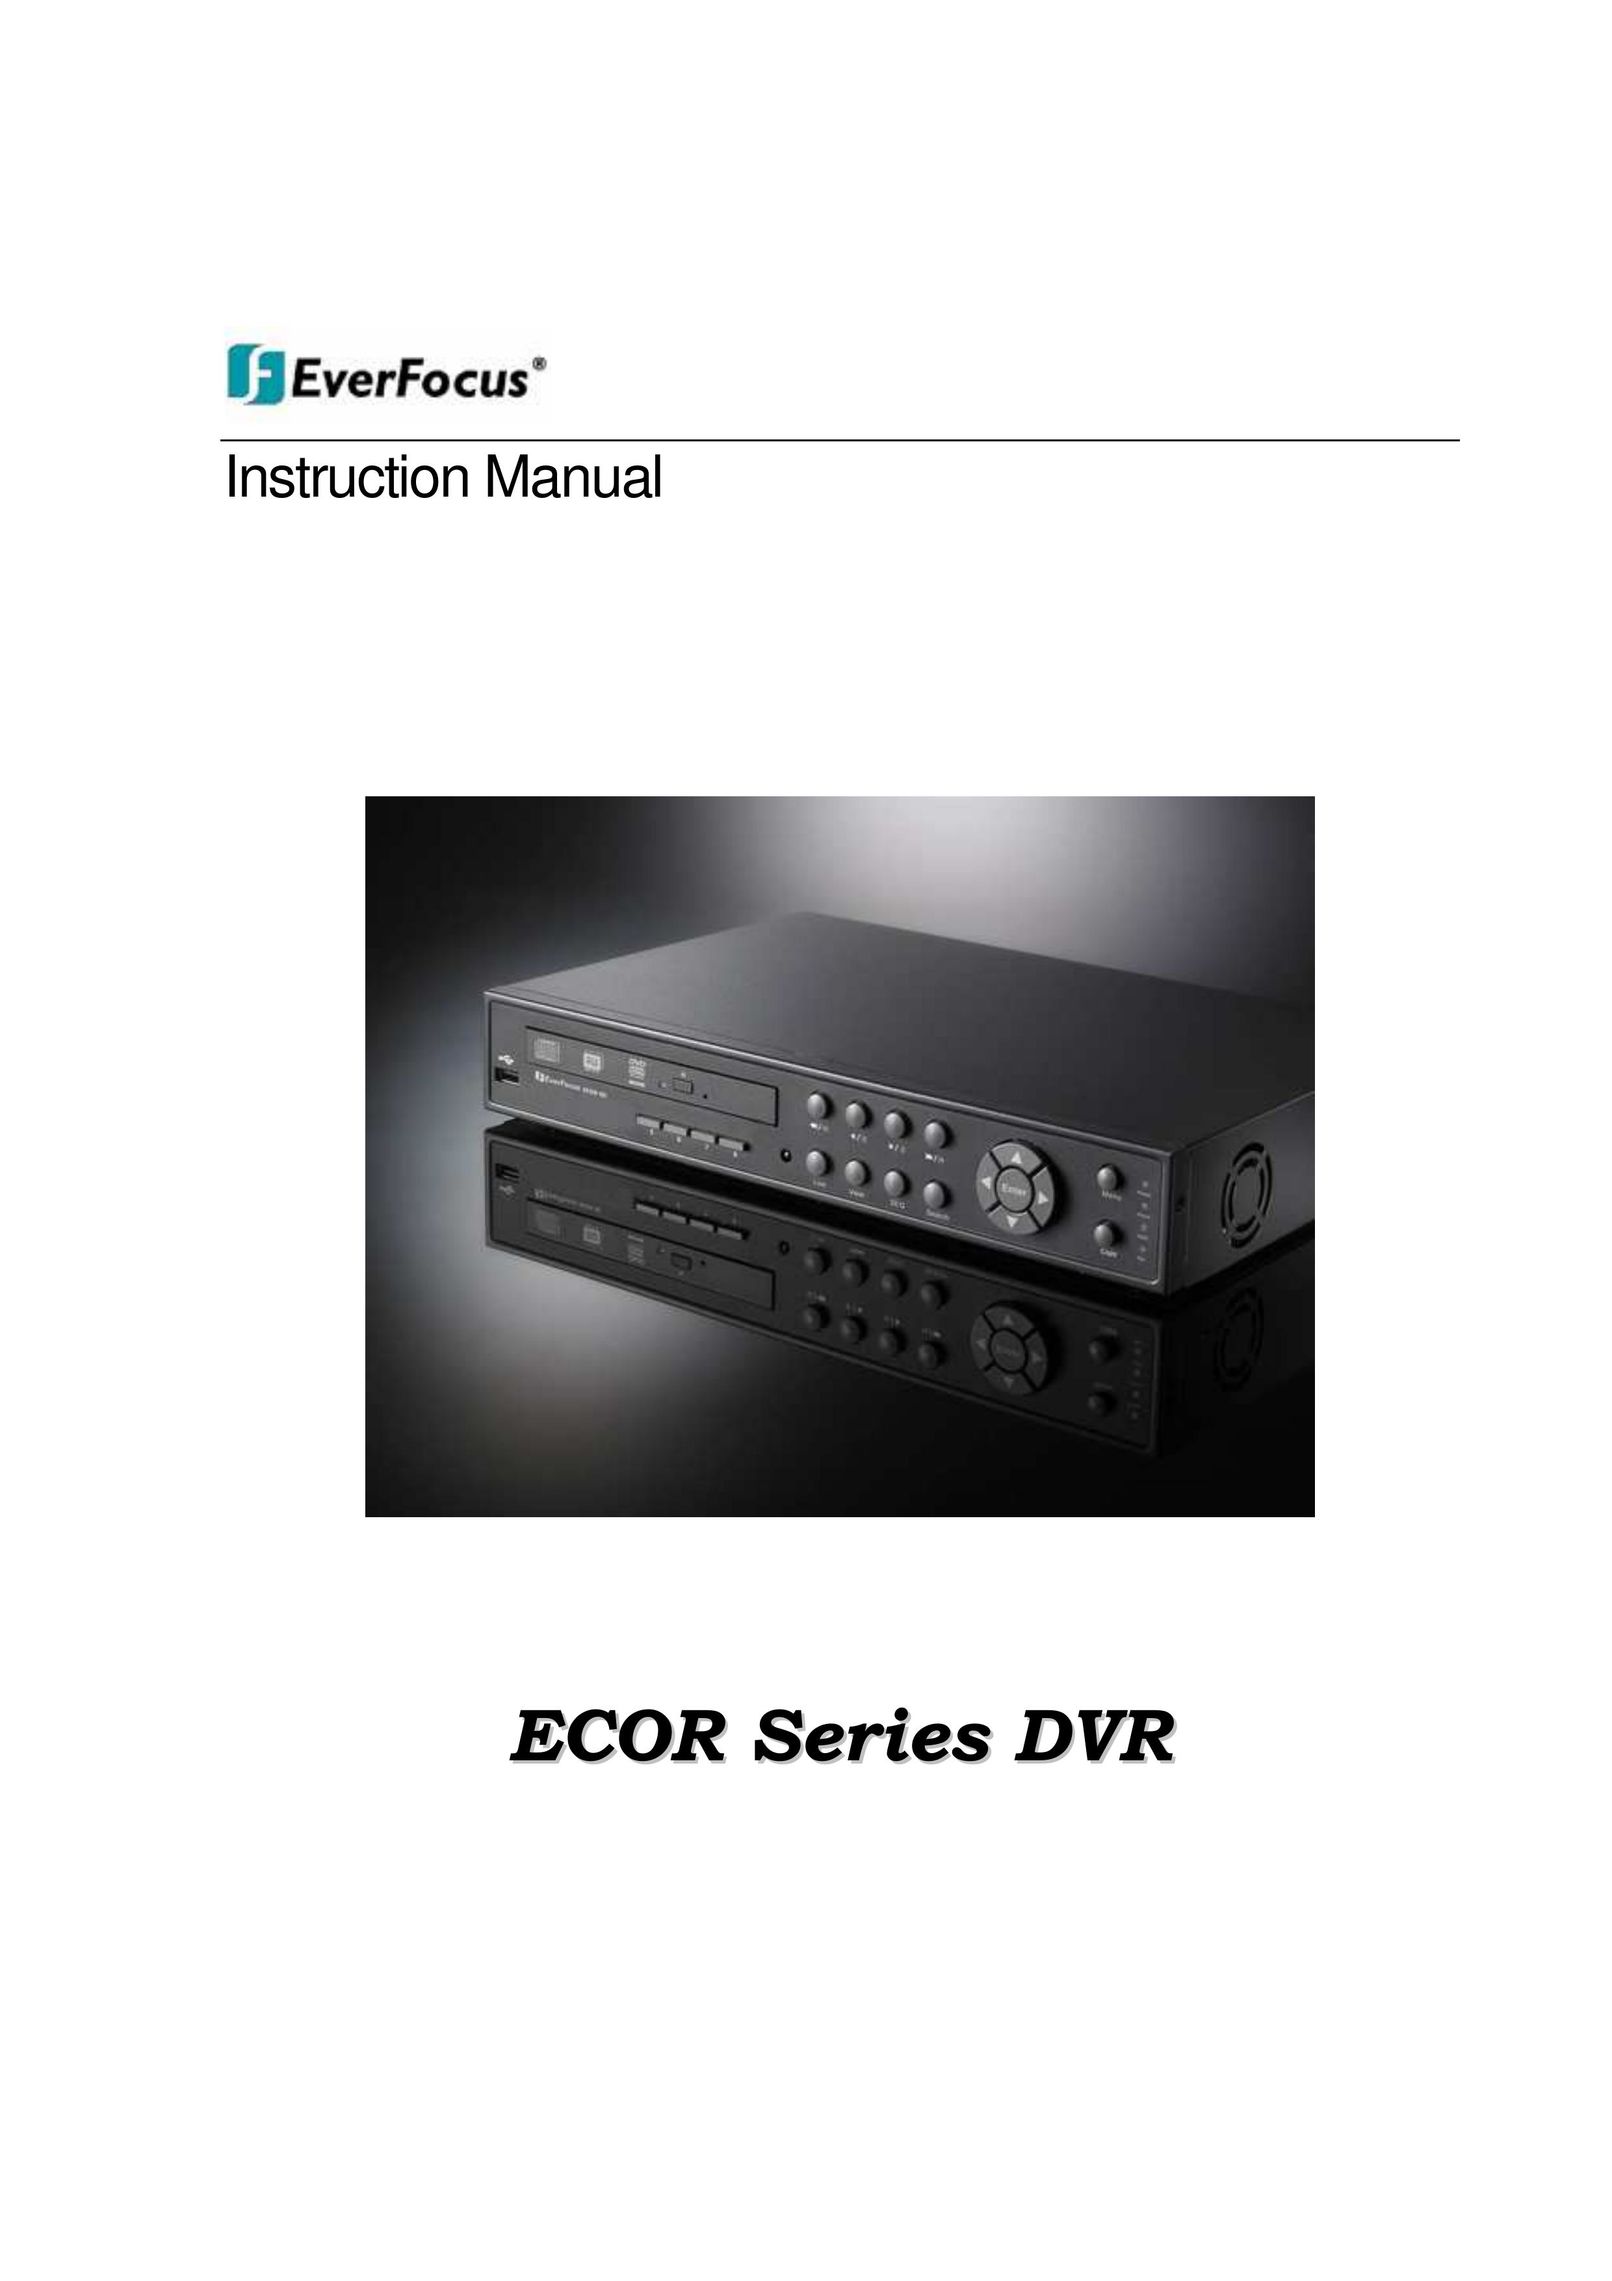 EverFocus ECOR Series DVR User Manual